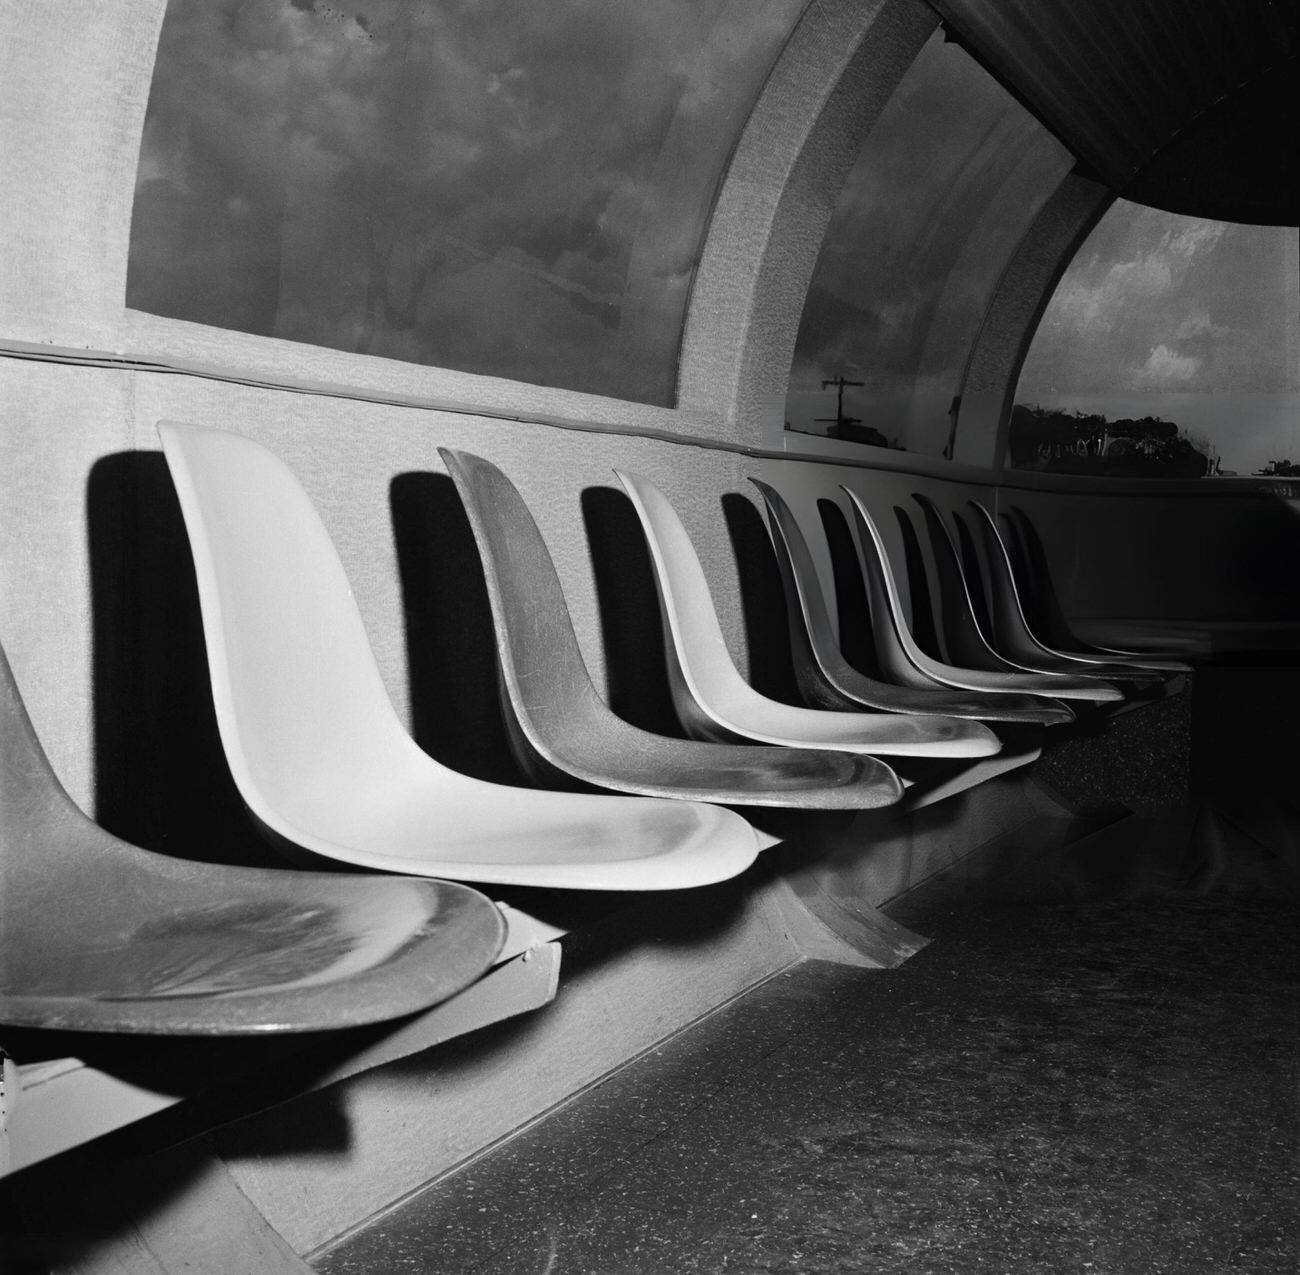 The coach of the 'Trailblazer' monorail service in Houston, featuring individual contoured plastic seats, circa 1956.